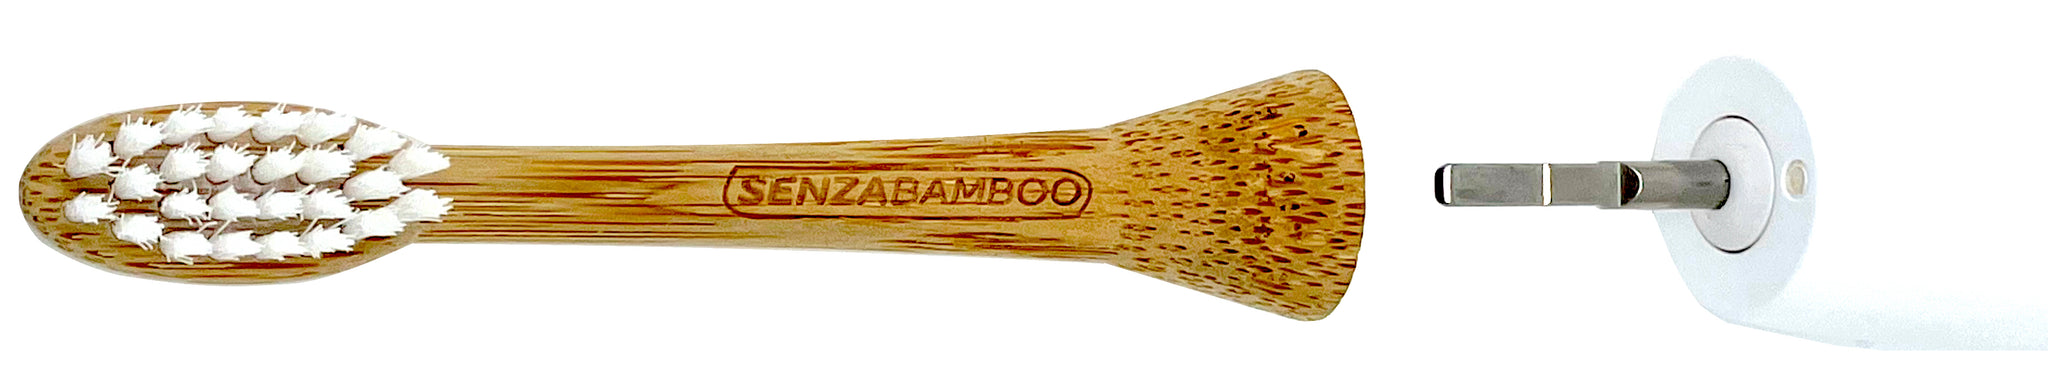 Replacement Bamboo Brush Heads